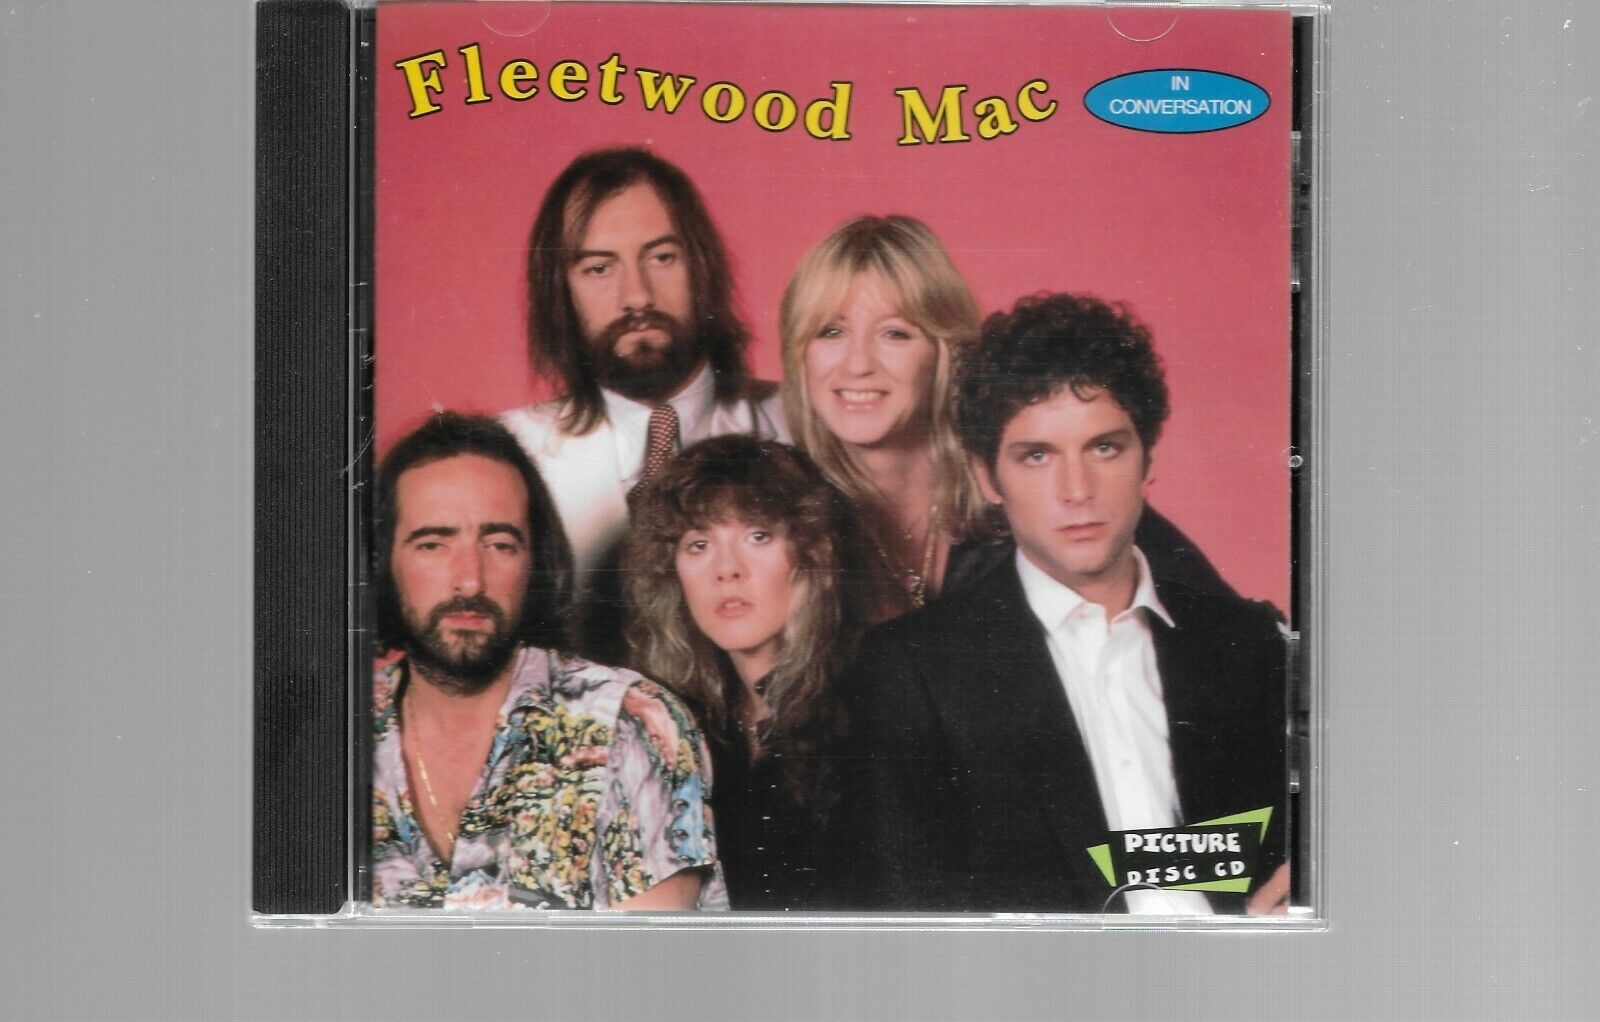 Fleetwood Mac in Conversation CD / Mick Fleetwood only Interview / RARE 1994 UK